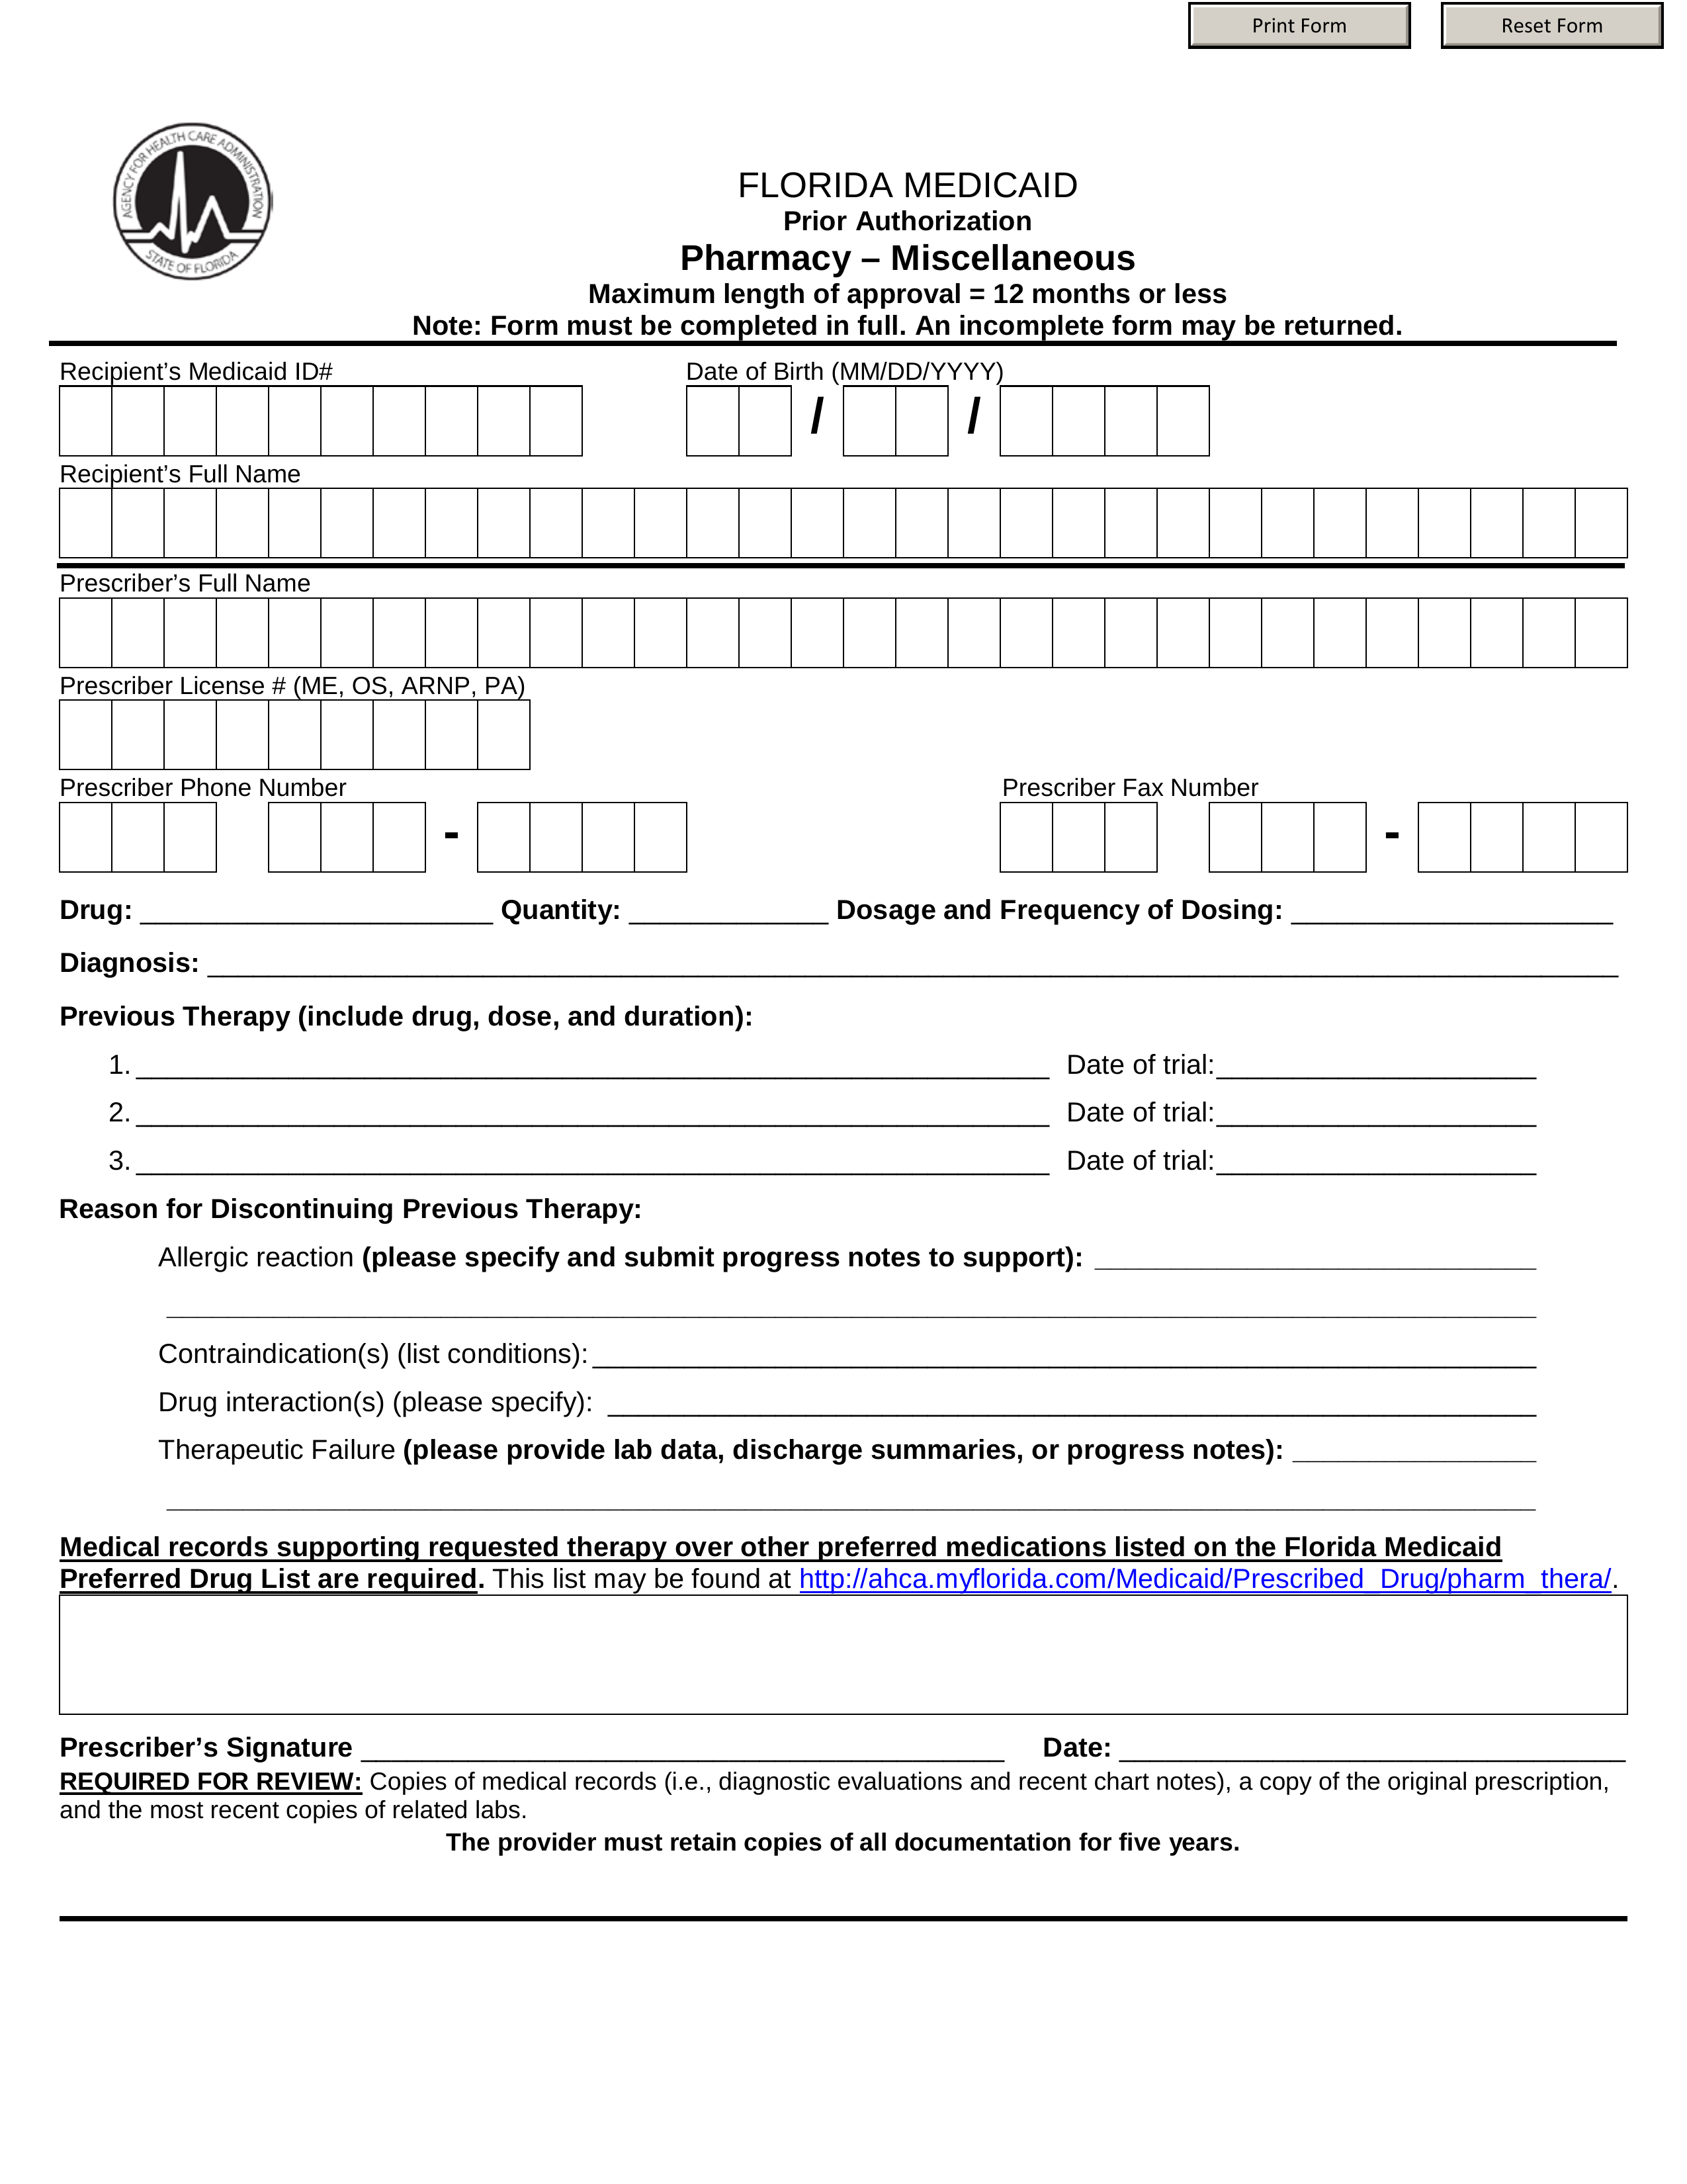 Free Florida Medicaid Prior (Rx) Authorization Form - PDF - eForms